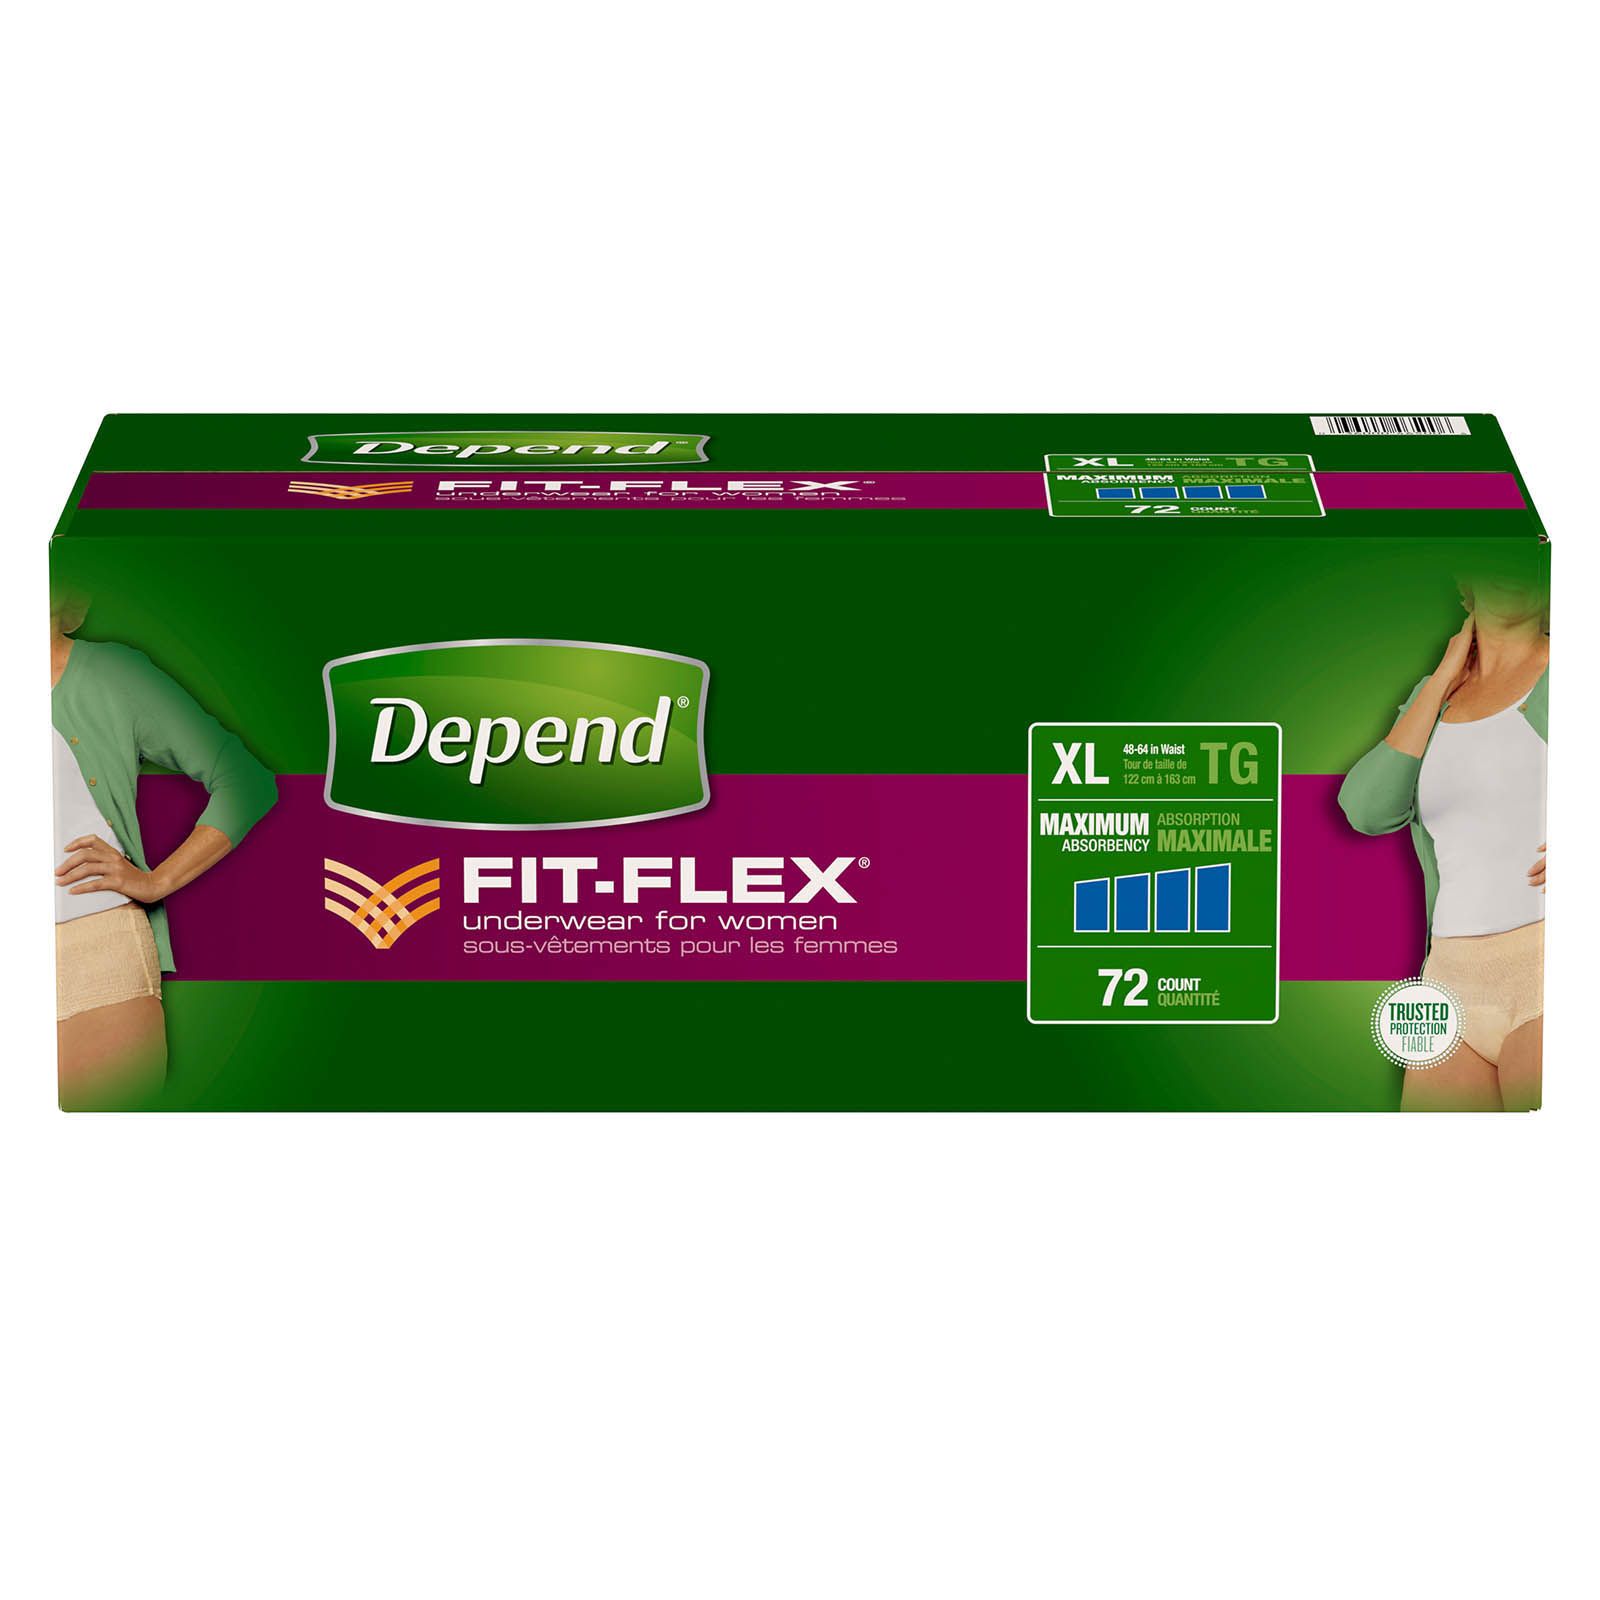 Depend Fit-Flex Incontinence Underwear for Women Maximum